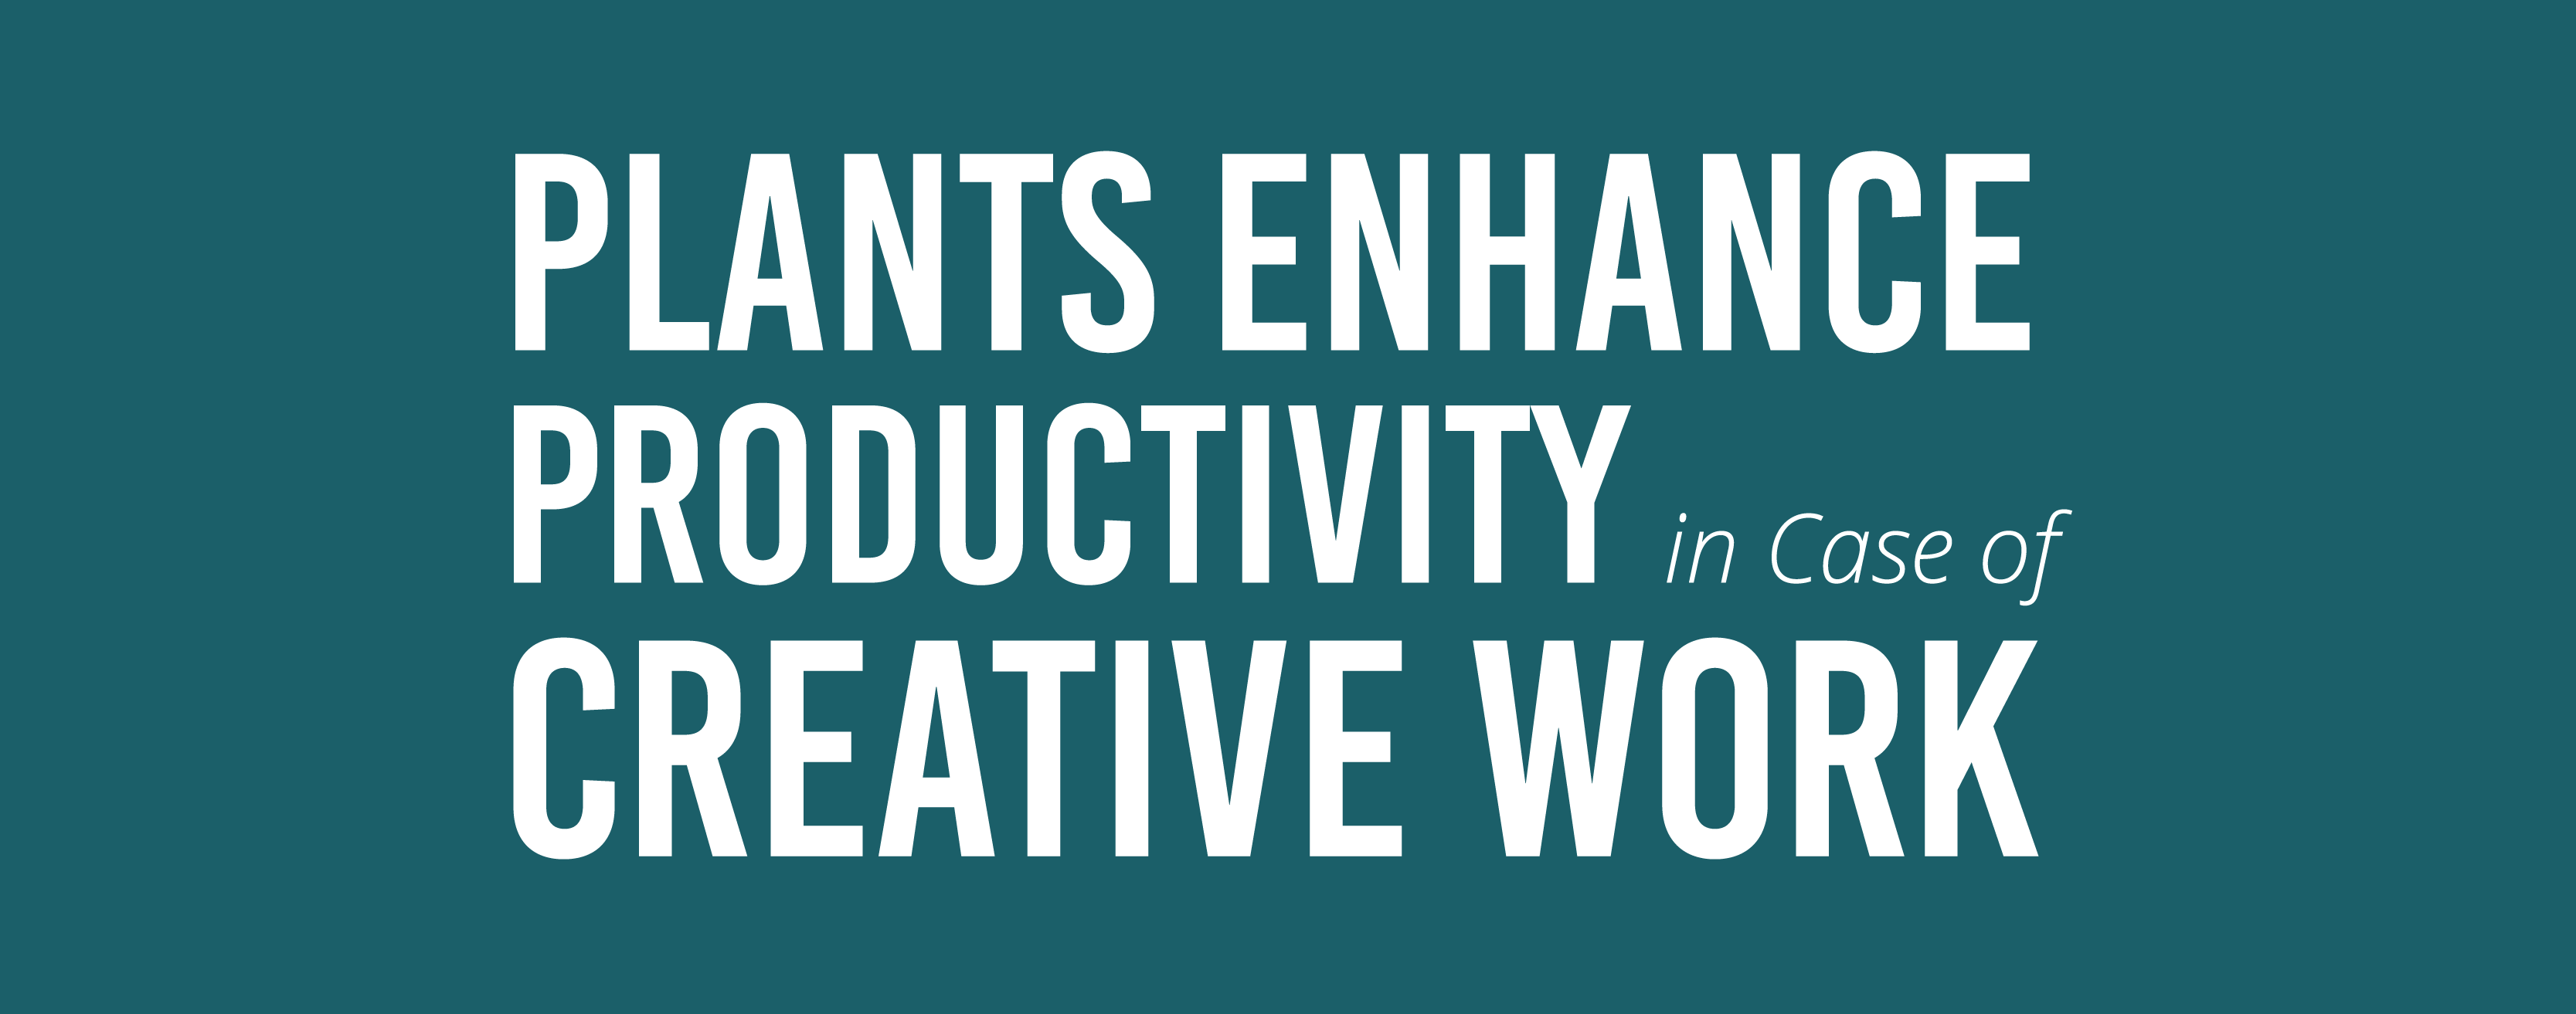 Plants enhance Productivity